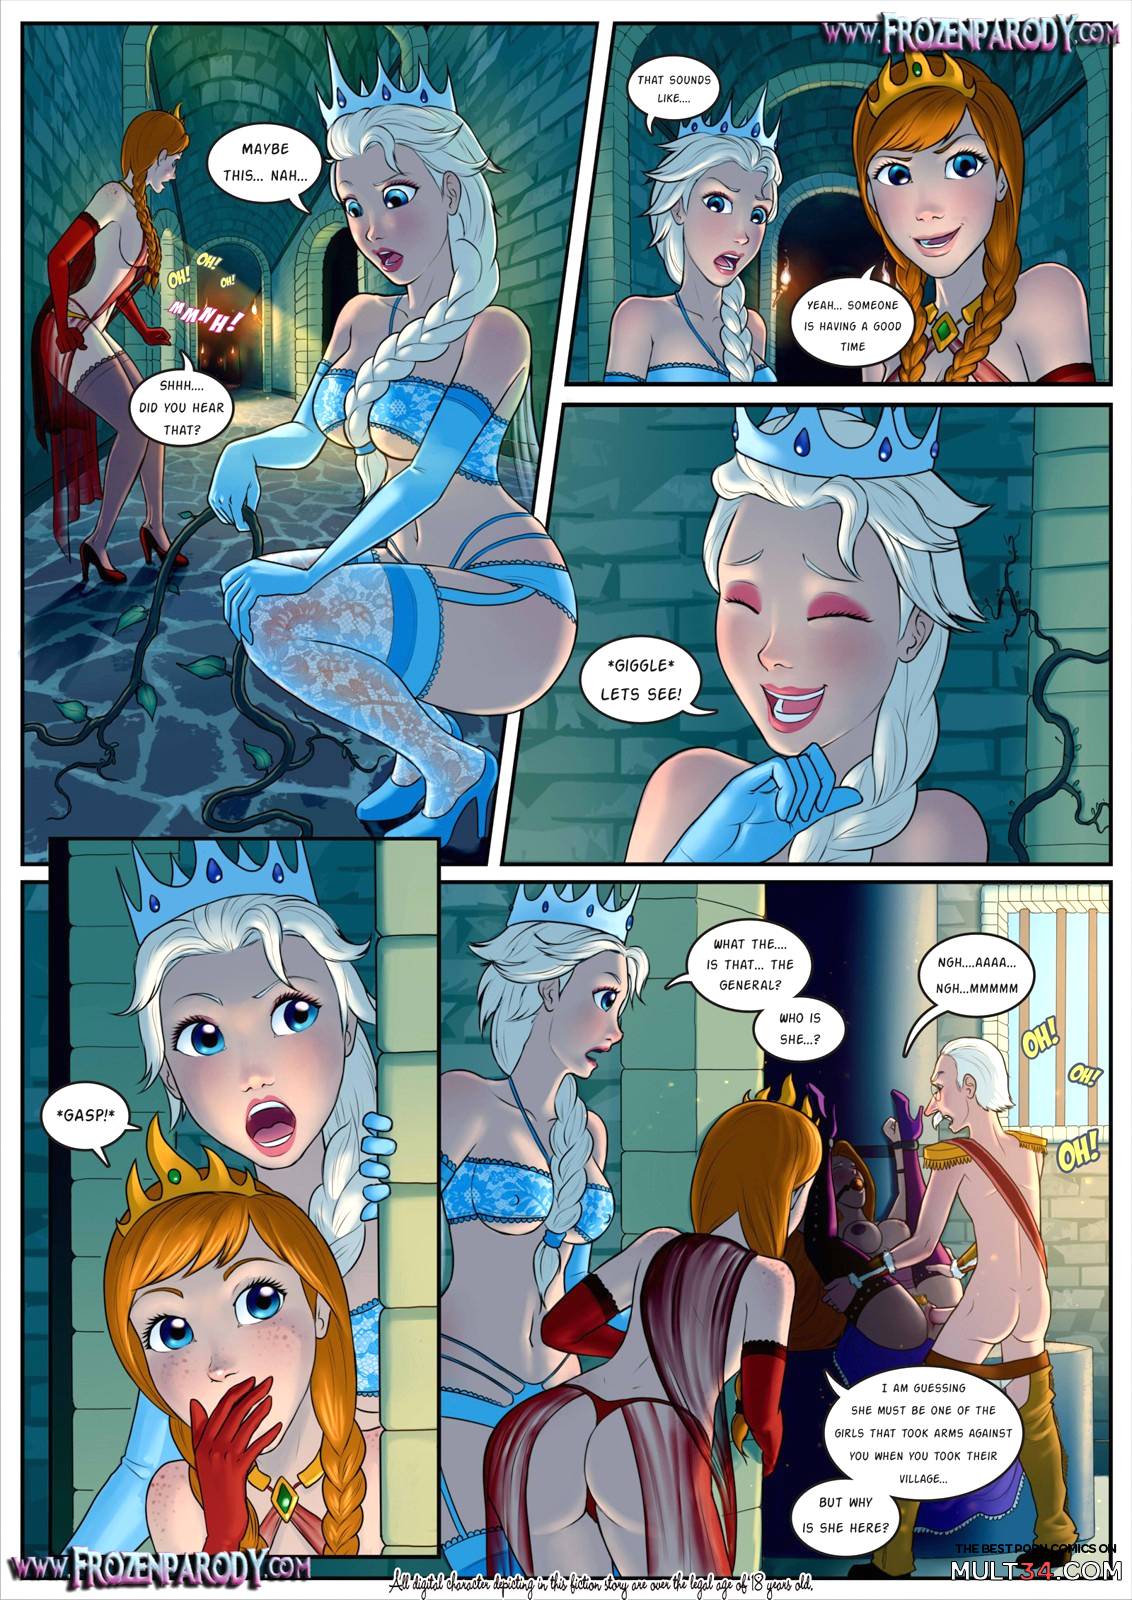 The Frozen - Frozen Parody 5 porn comic - the best cartoon porn comics, Rule 34 | MULT34